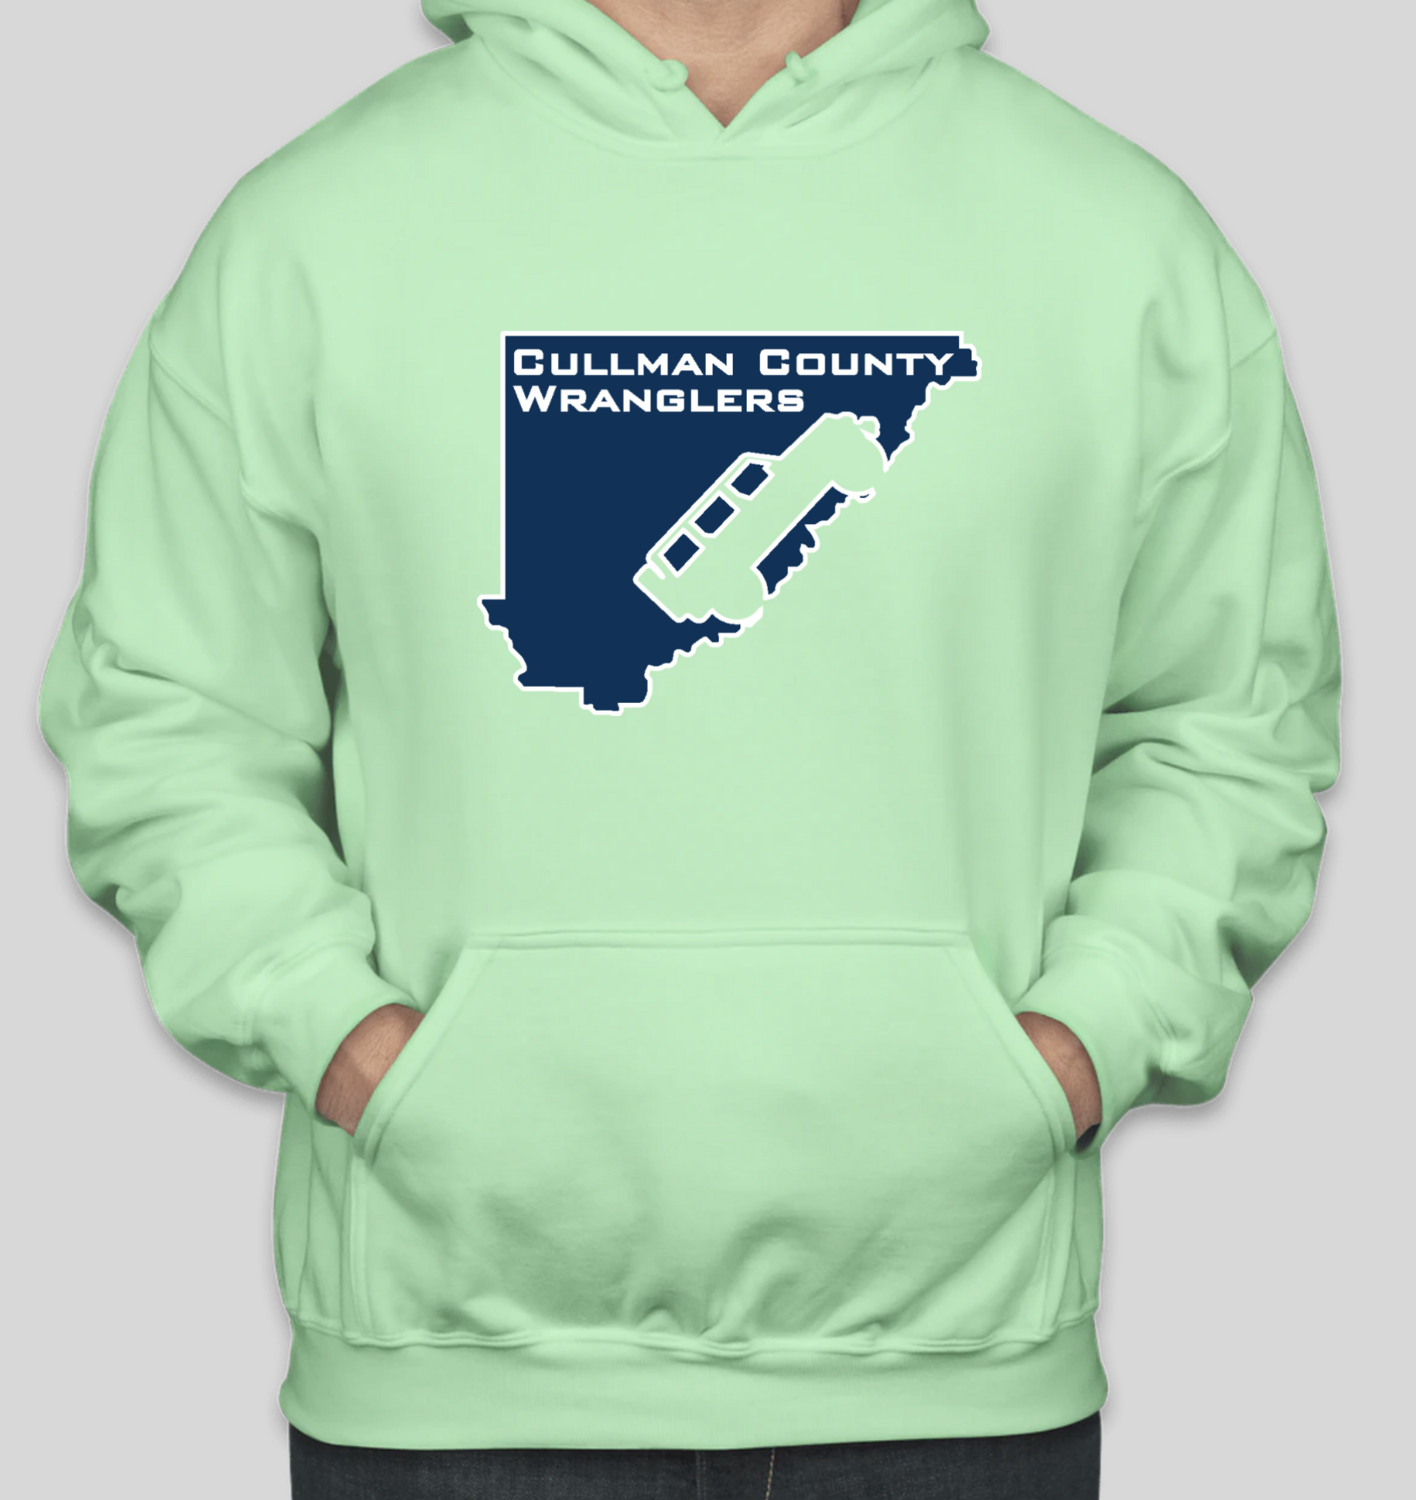 Cullman County Wranglers Hooded Sweatshirt - Mint Green